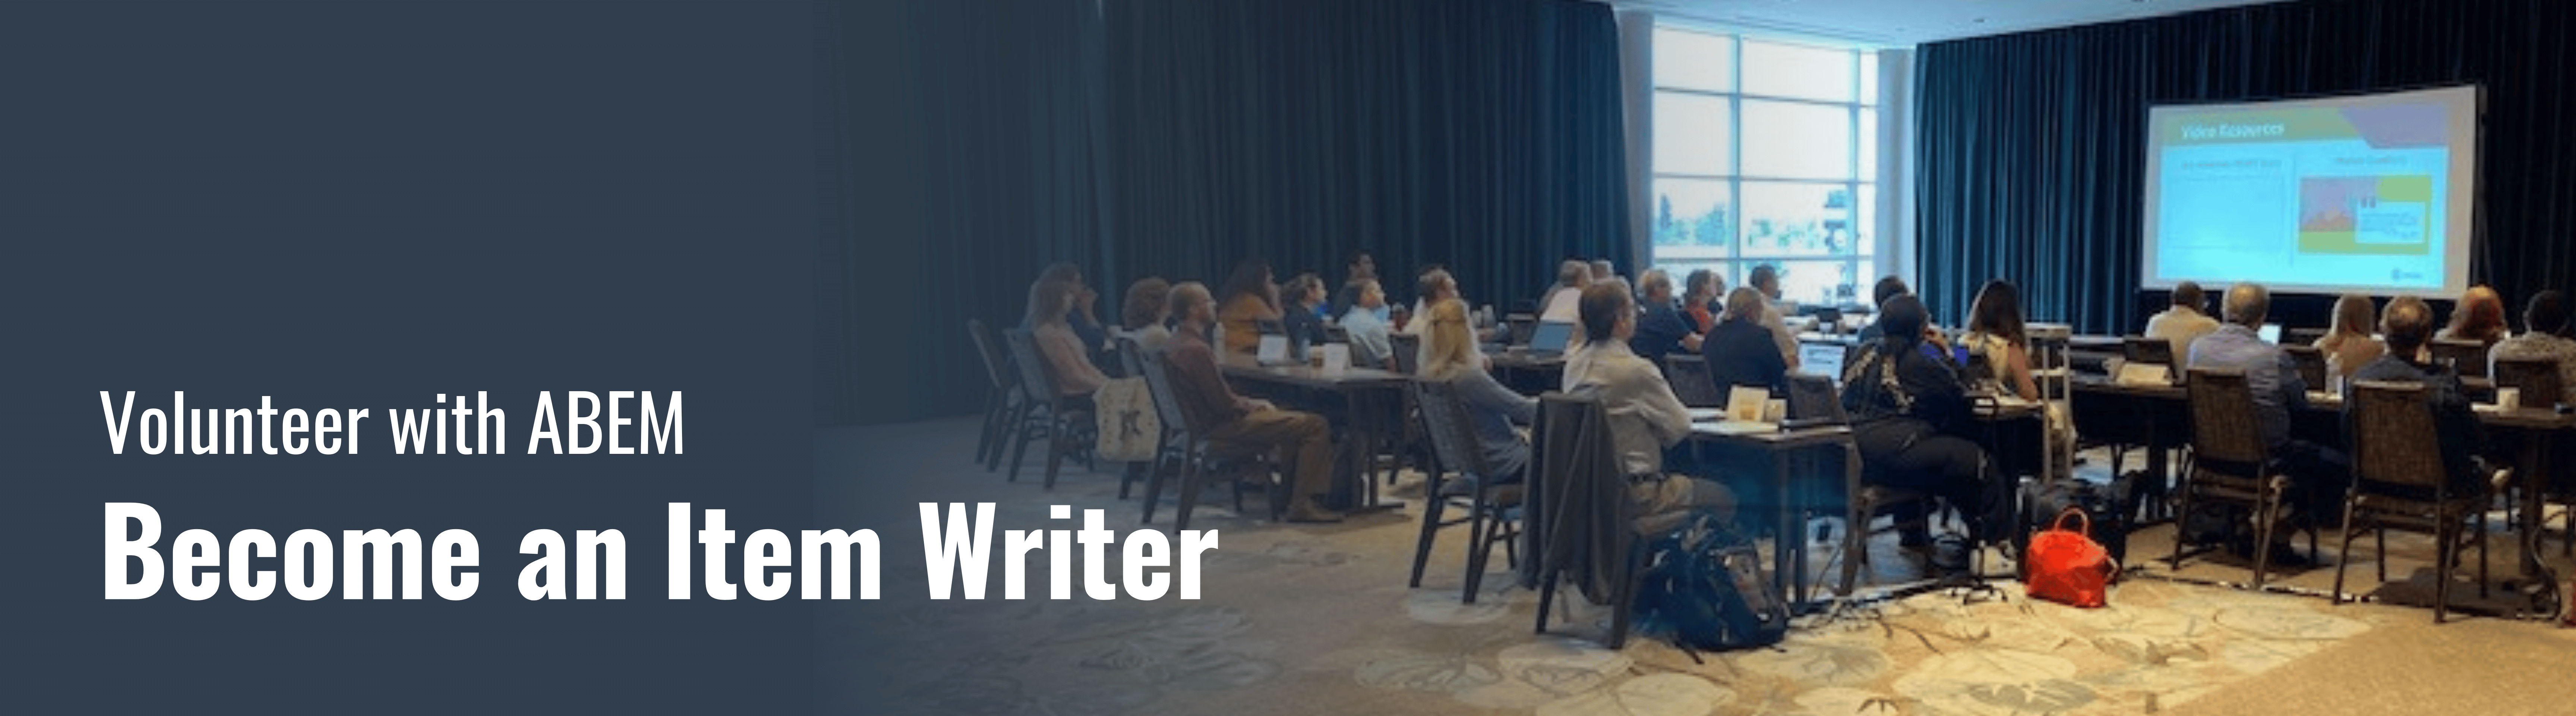 Become an Item Writer